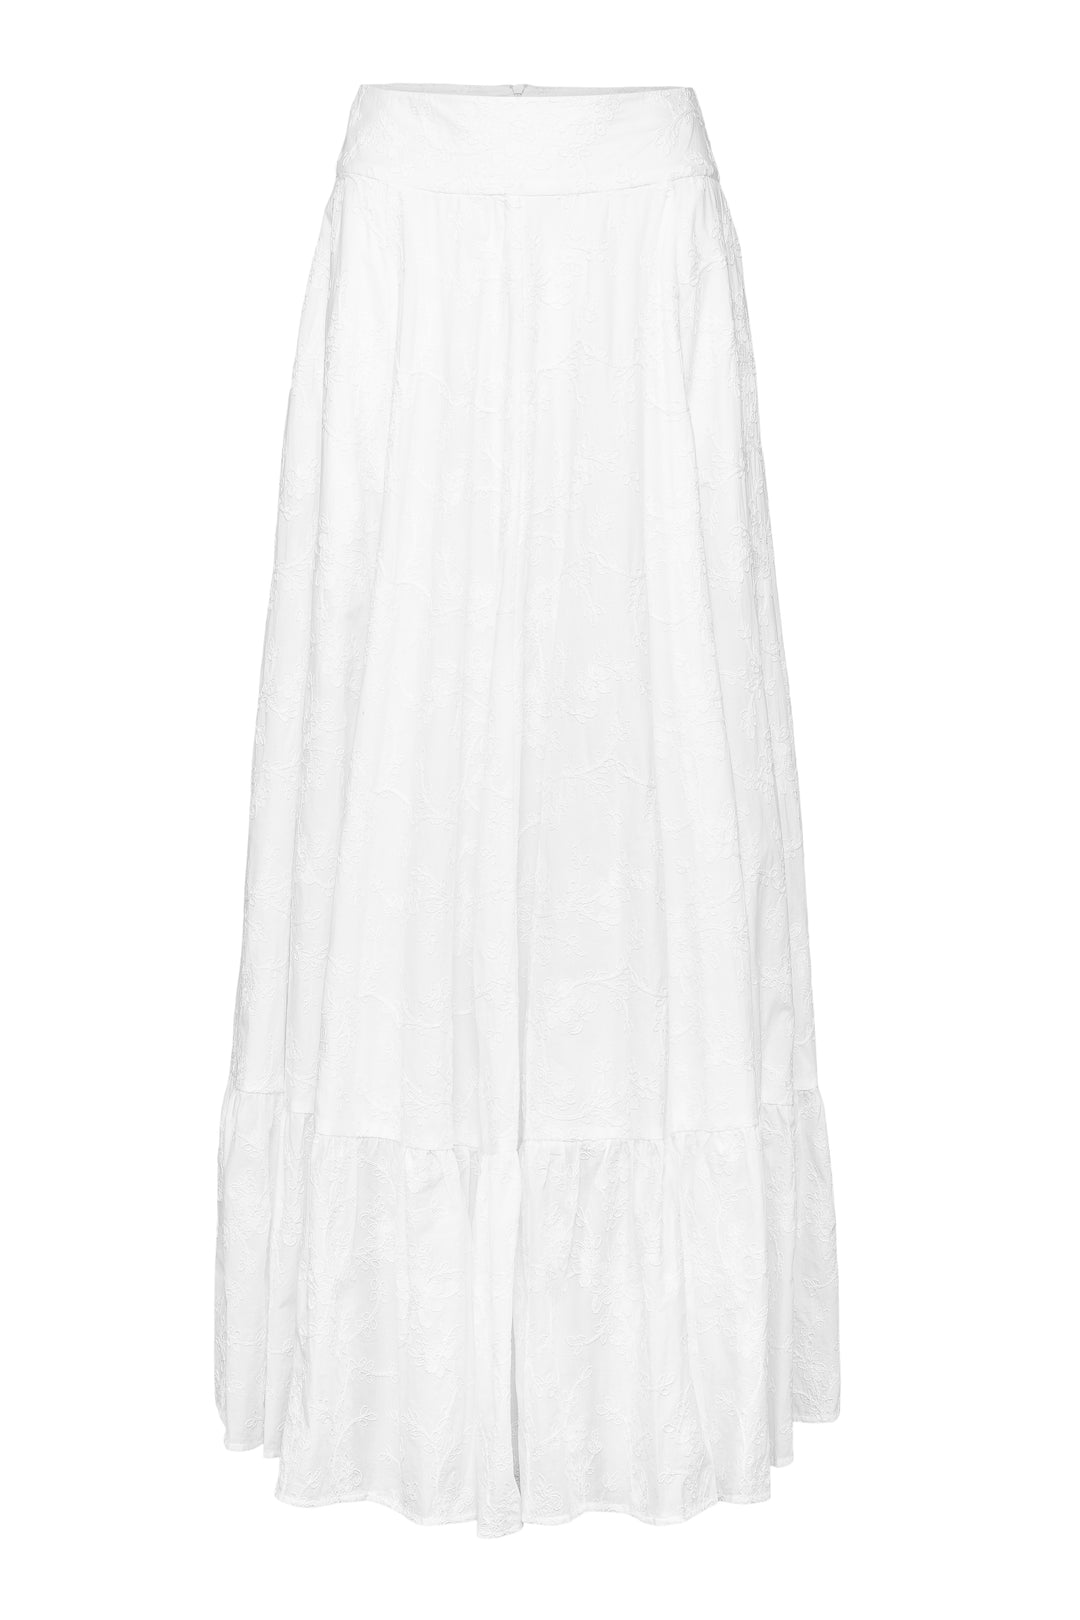 Ada Maxi Skirt White Embroidery